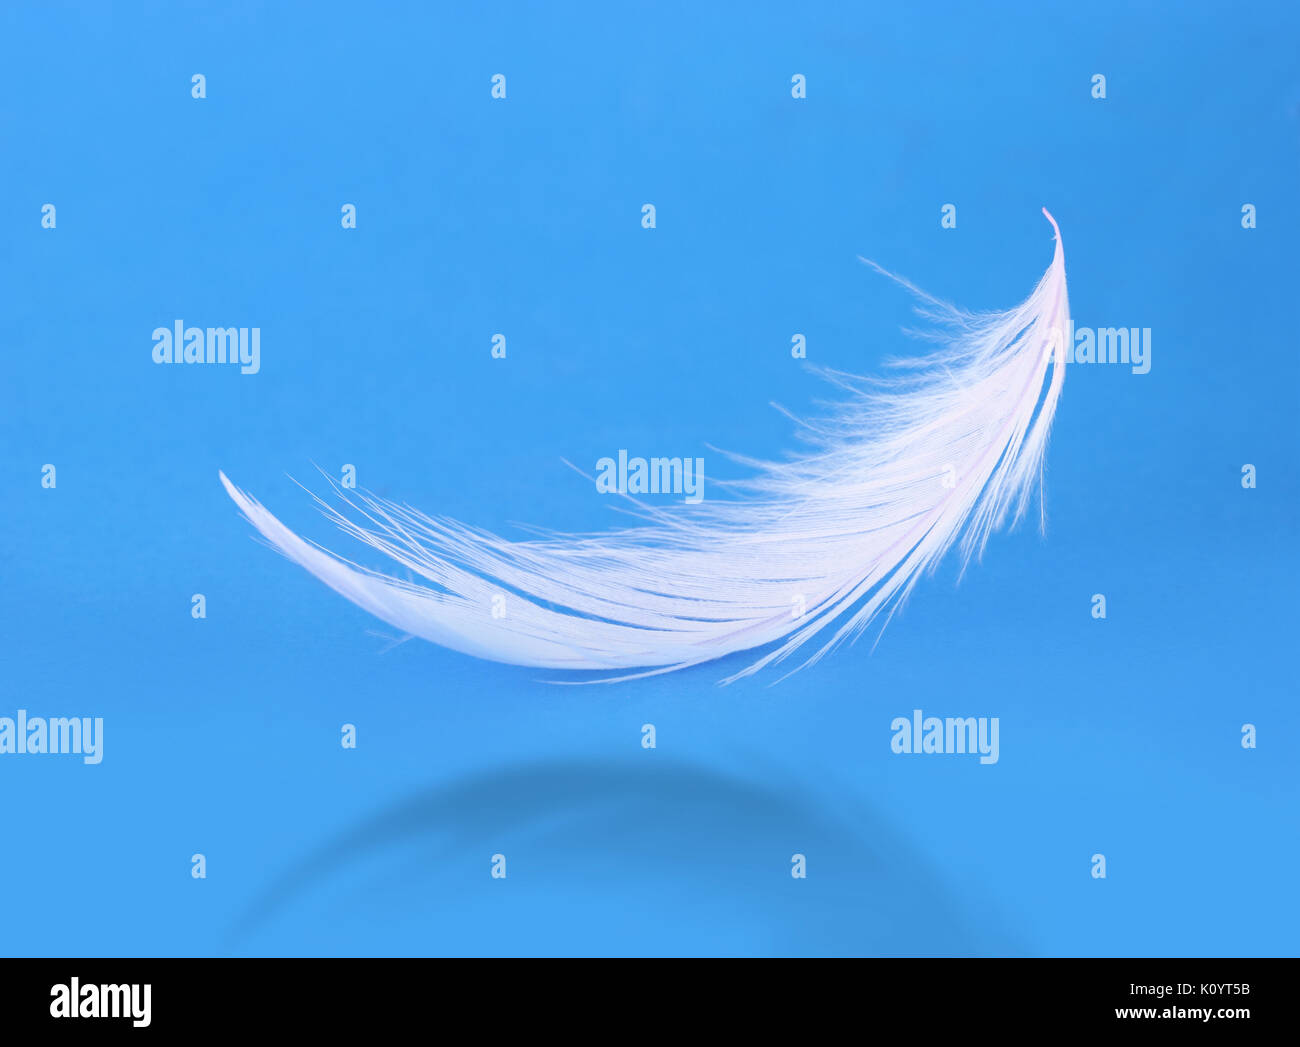 Flying white feather on blue background Stock Photo